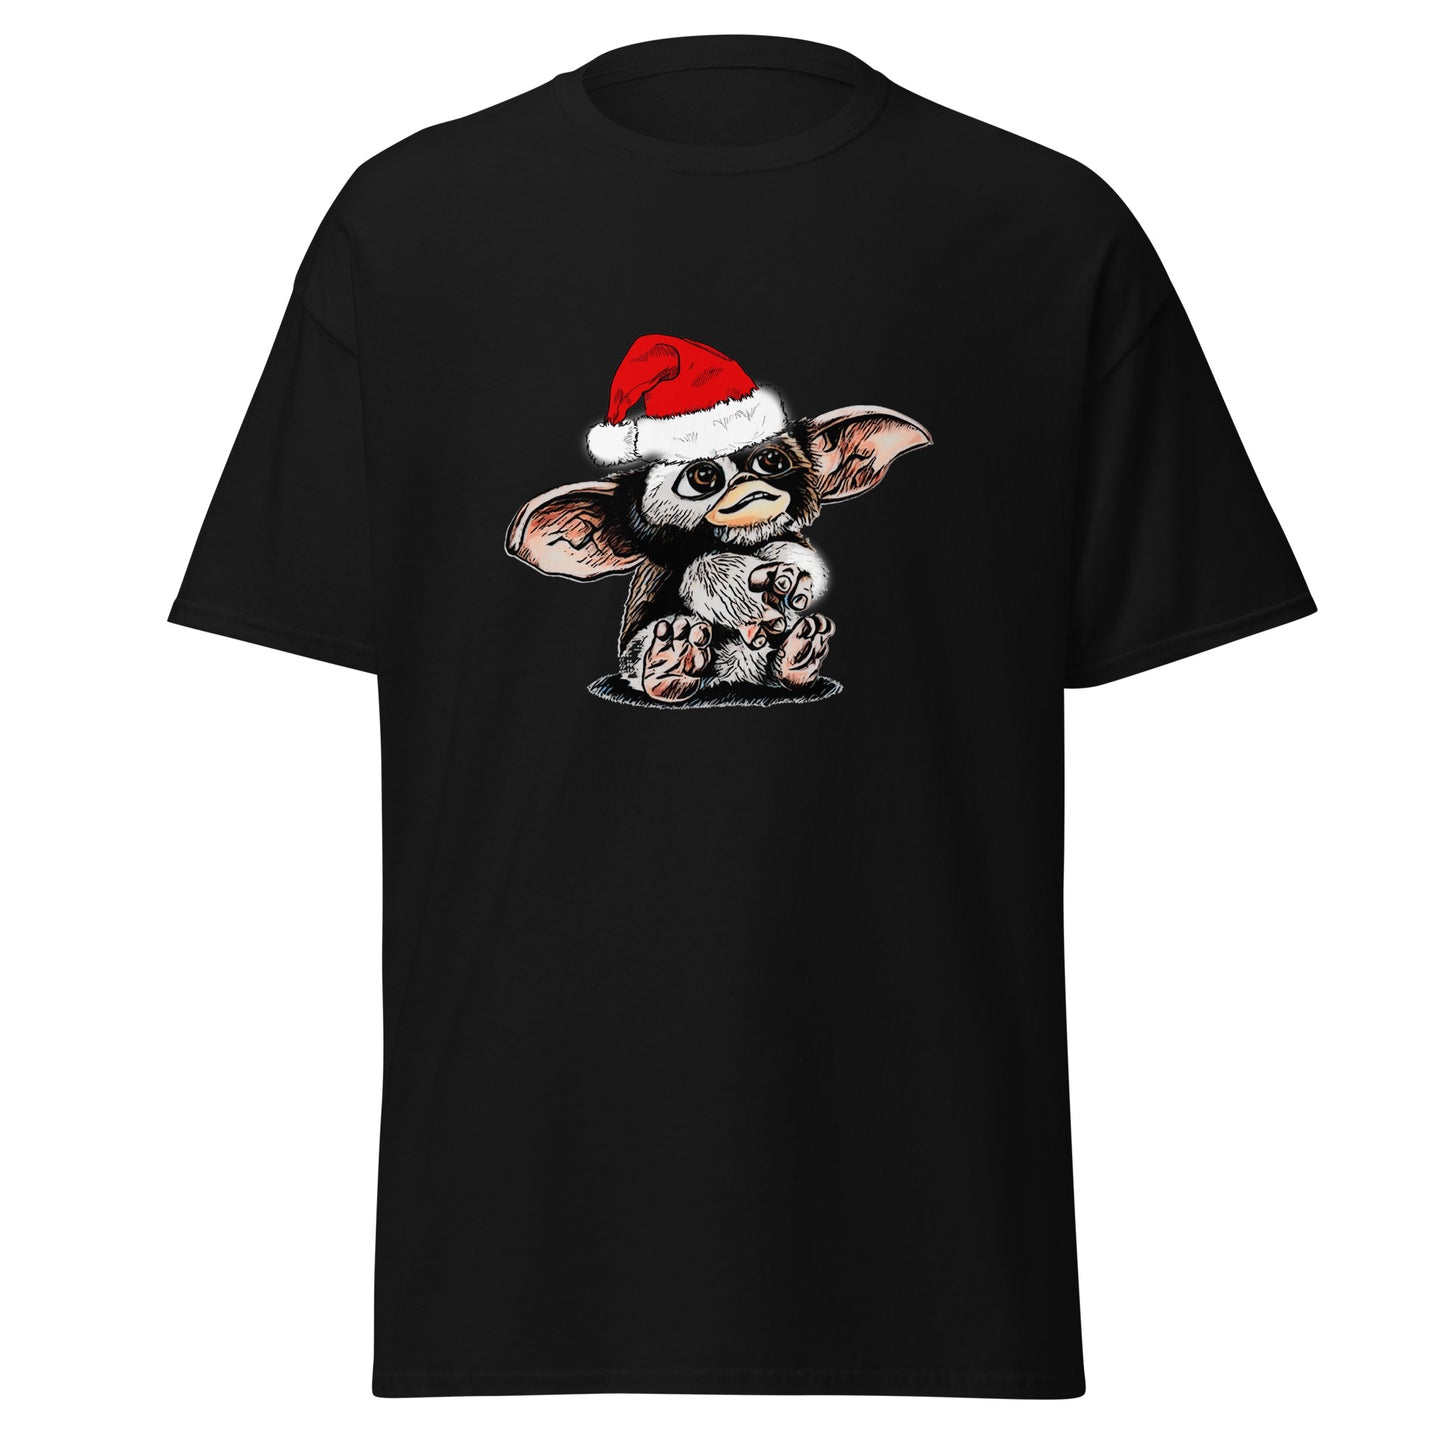 Gizmo Christmas T-Shirt - Adorable Festive Fantasy